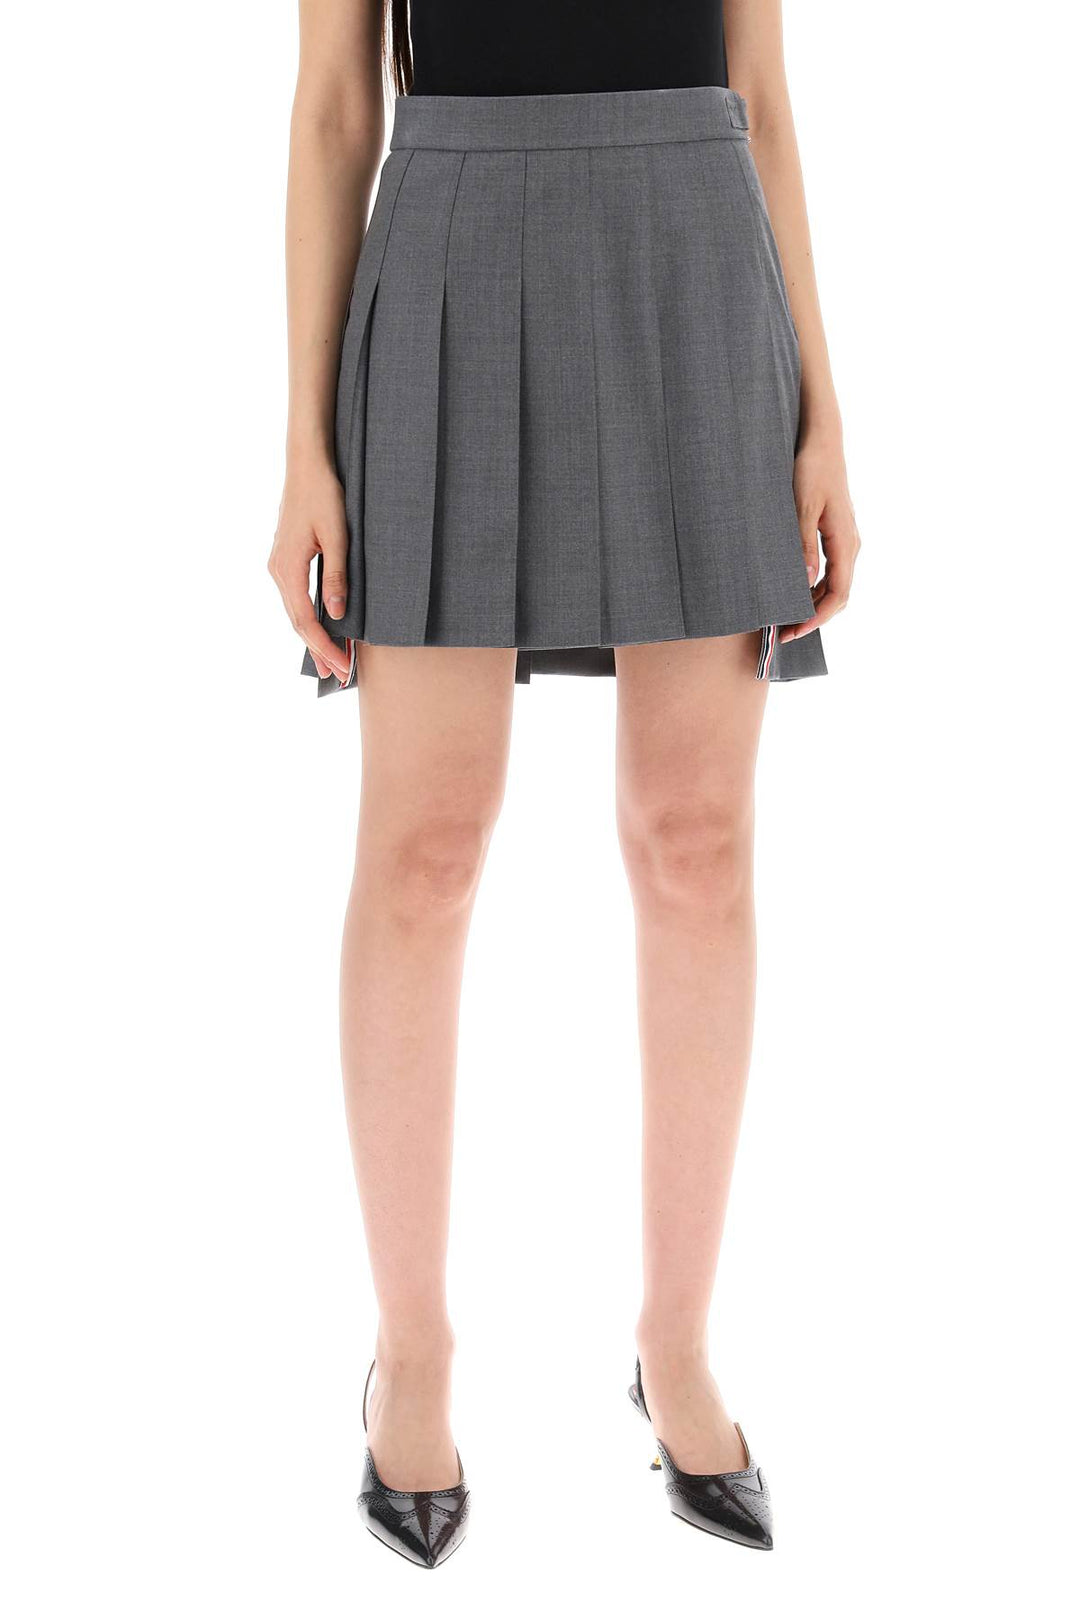 Thom Browne Wool Pleated Mini Skirt   Grey